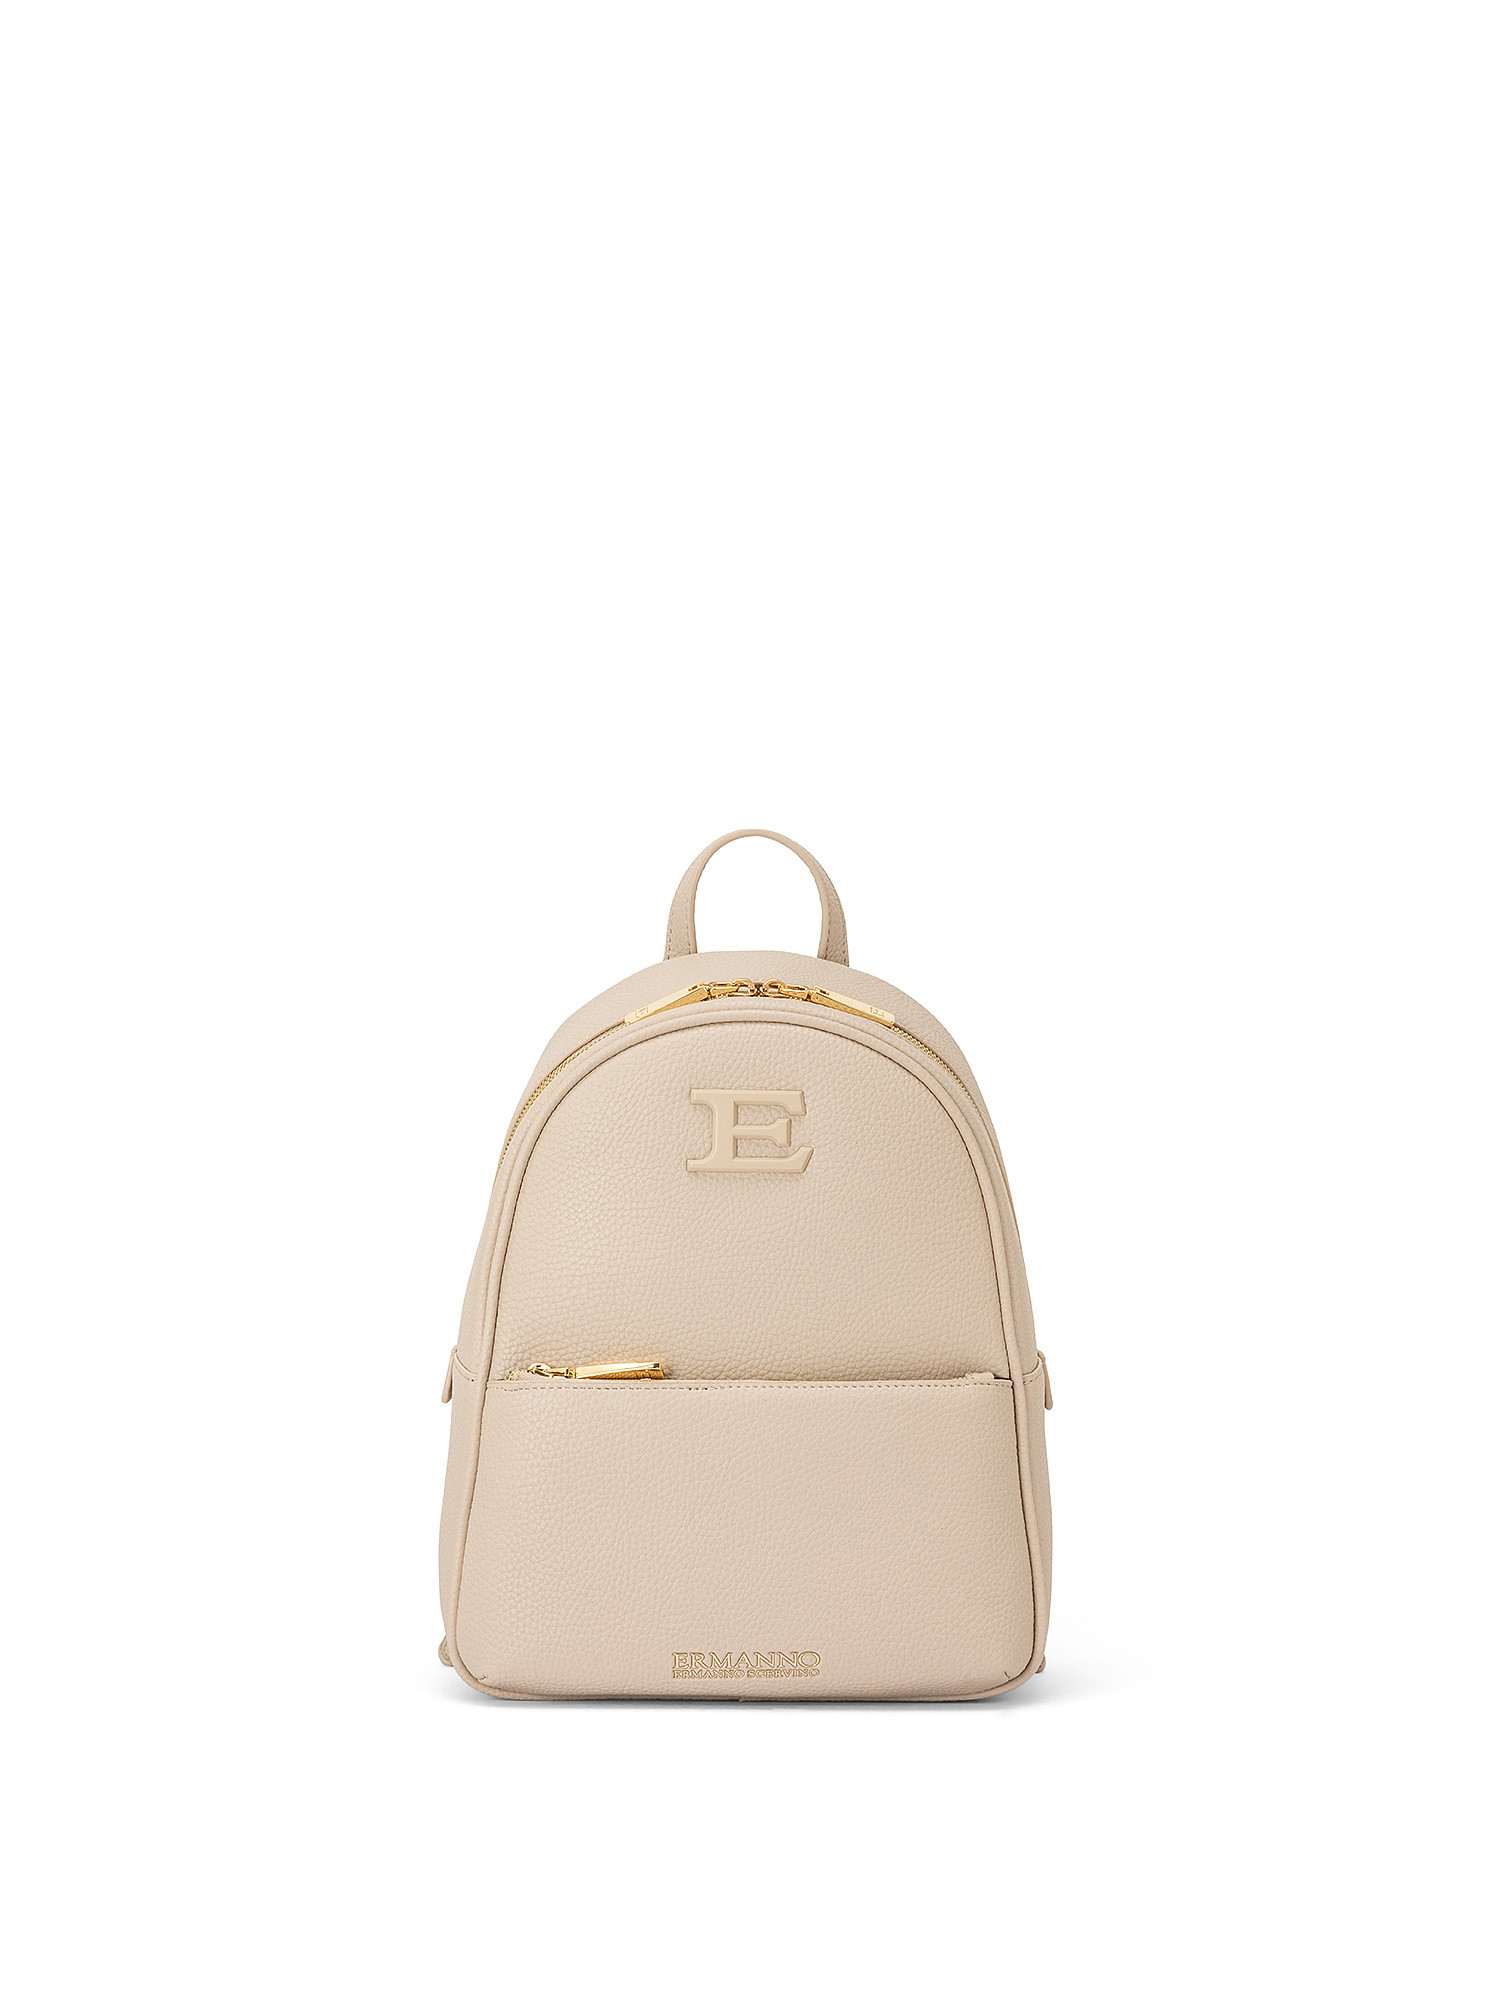 Eba backpack, Cream, large image number 0